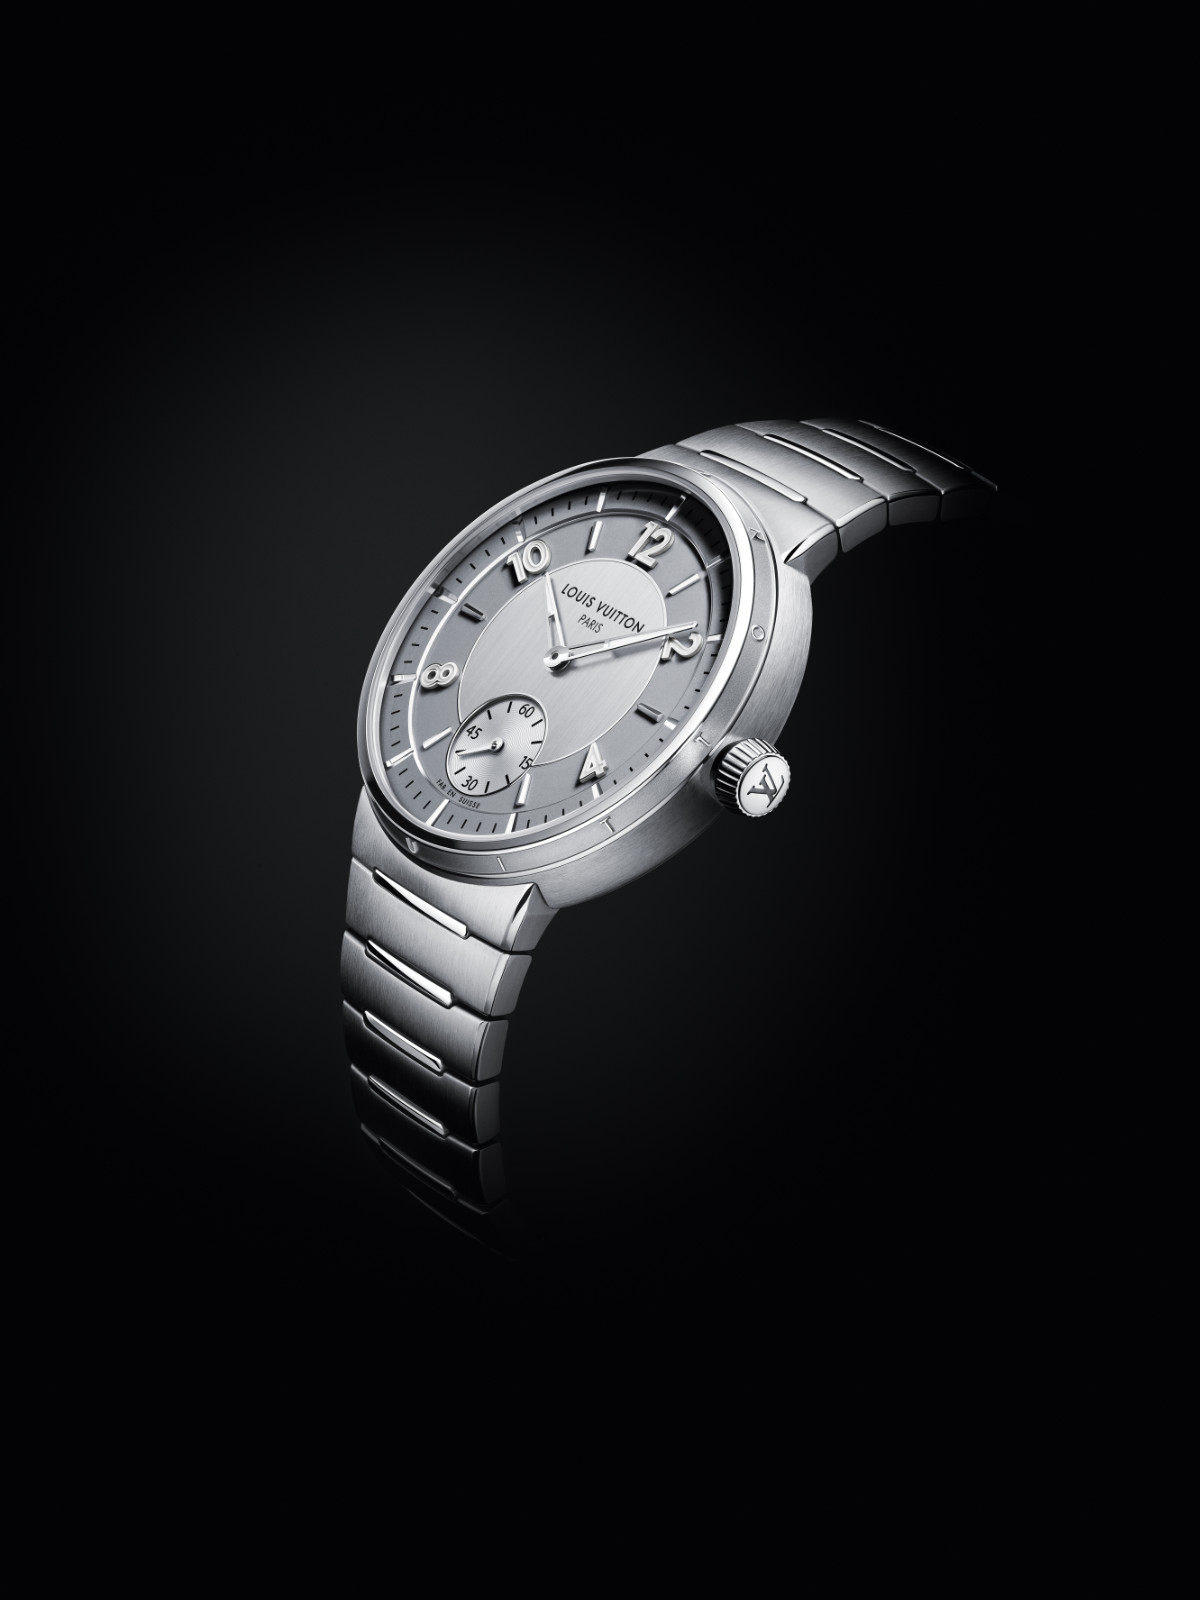 Twenty4 O'clock - $330 Reloj Louis Vuitton Modelo para